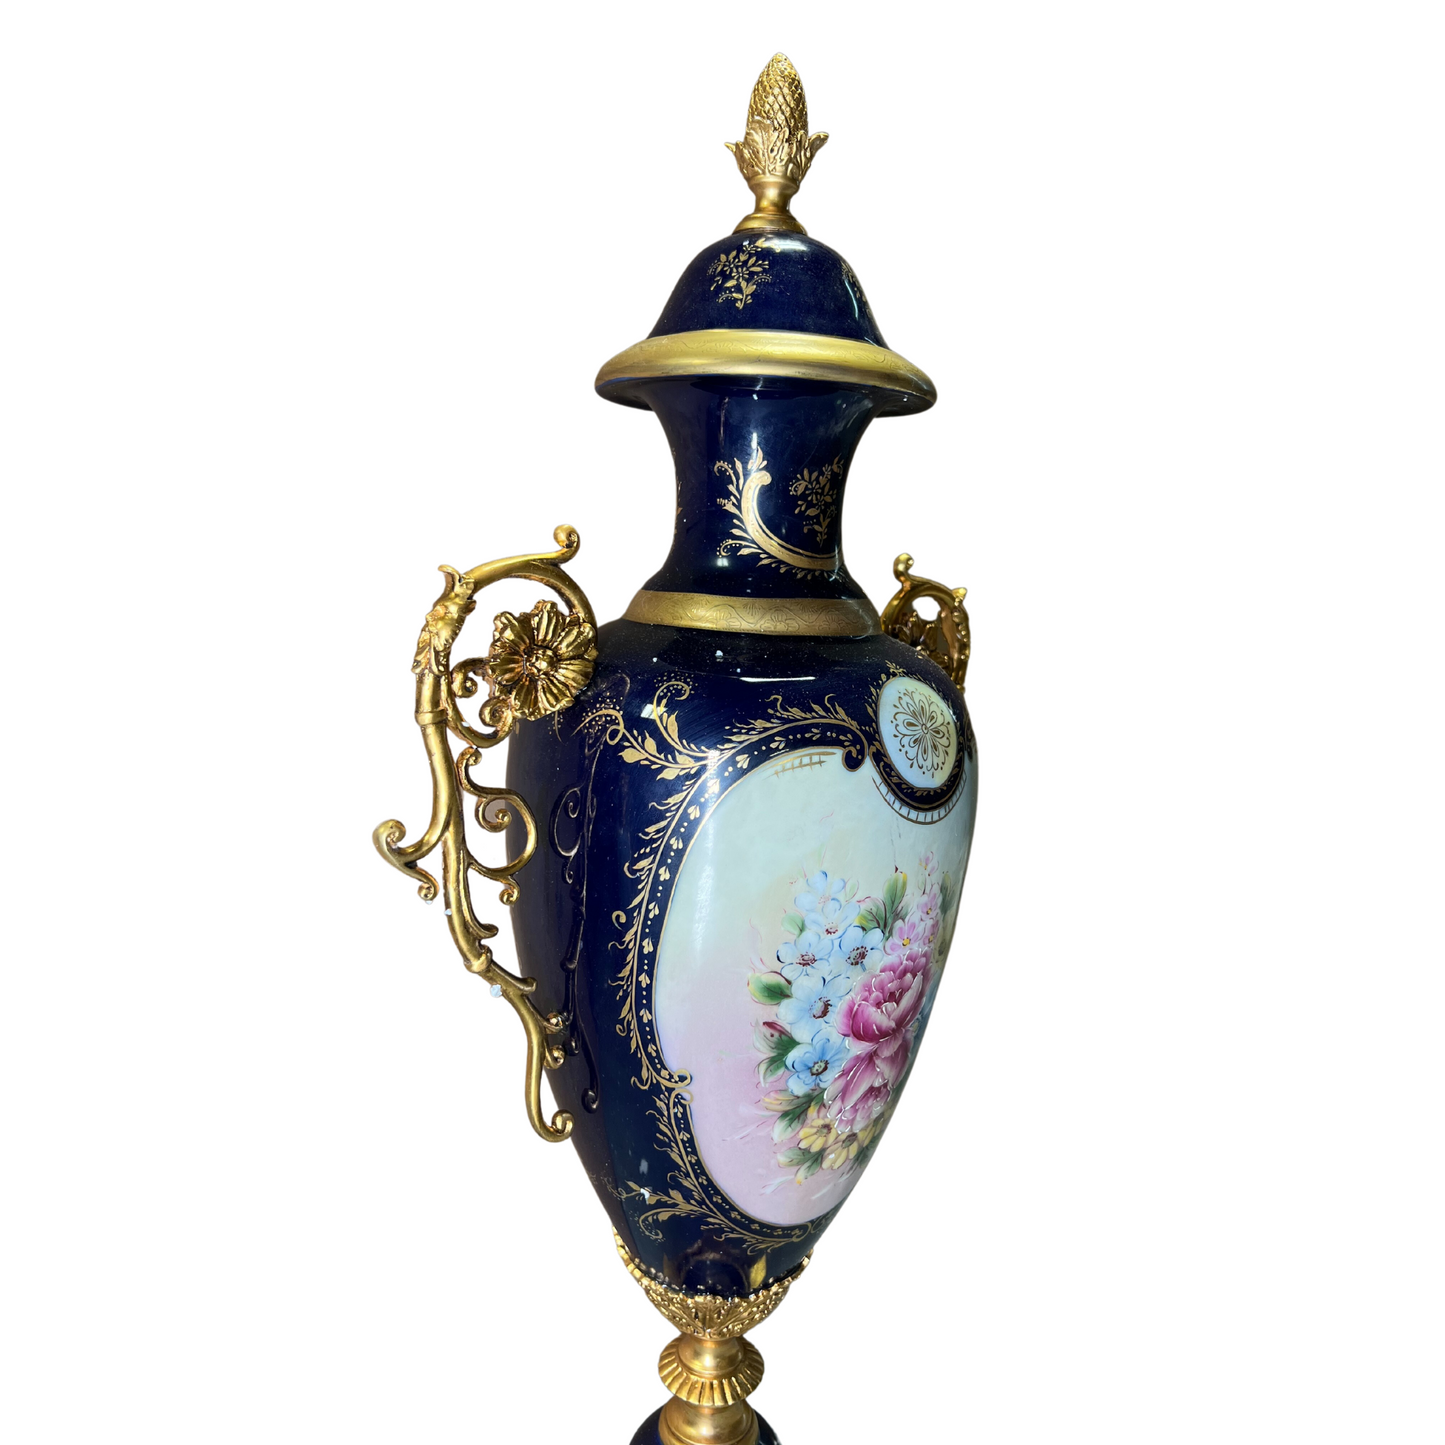 Striking Hand-Painted Victorian Style Porcelain And Bronze Cherub Handle Vase